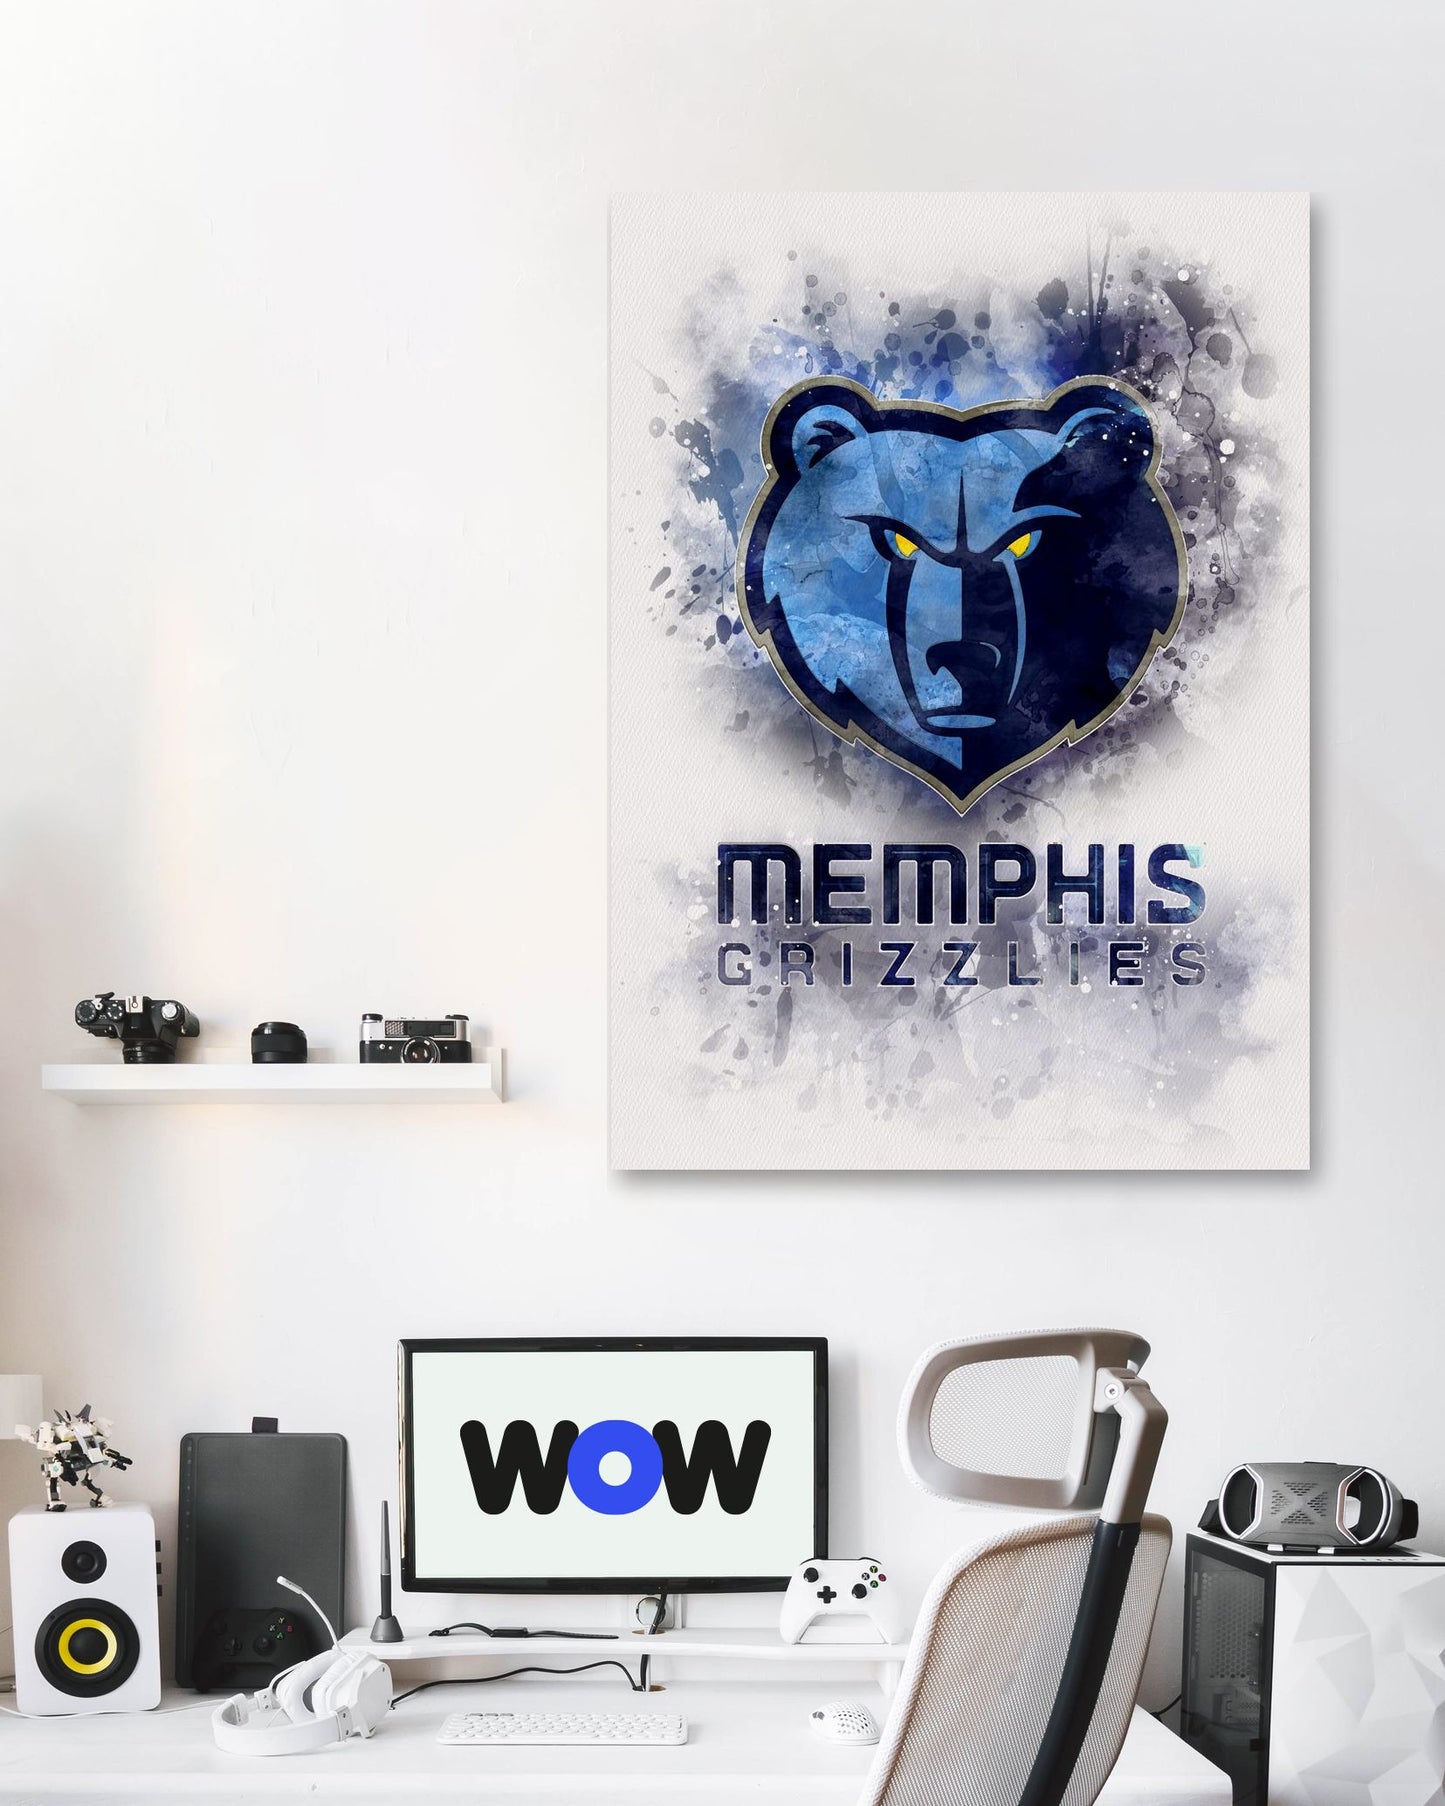 Memphis Grizzlies - @ArtStyle